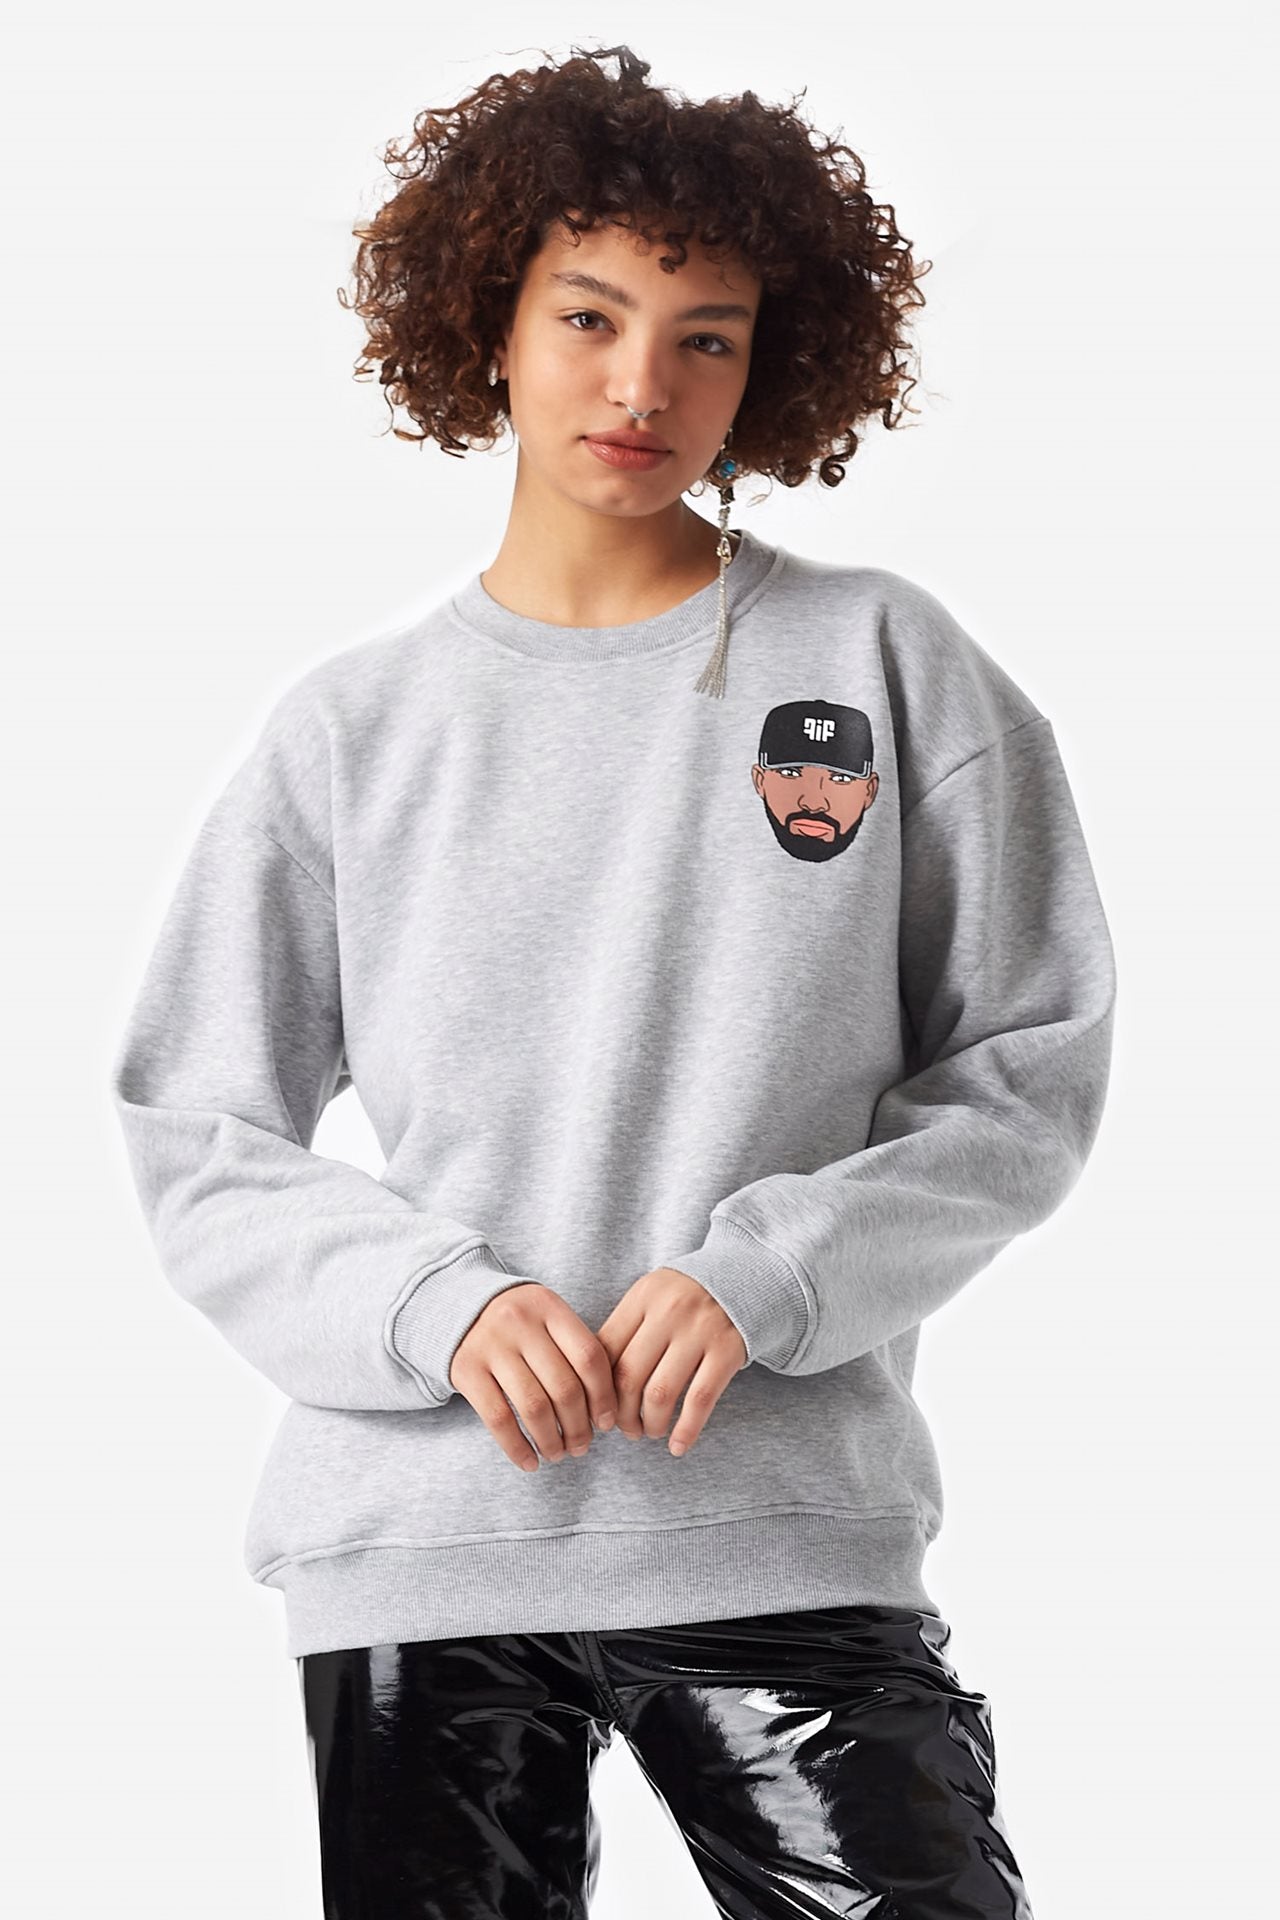 D Sweatshirt Unisex Sweatshirts & Hoodies FIF X-Small Grey 